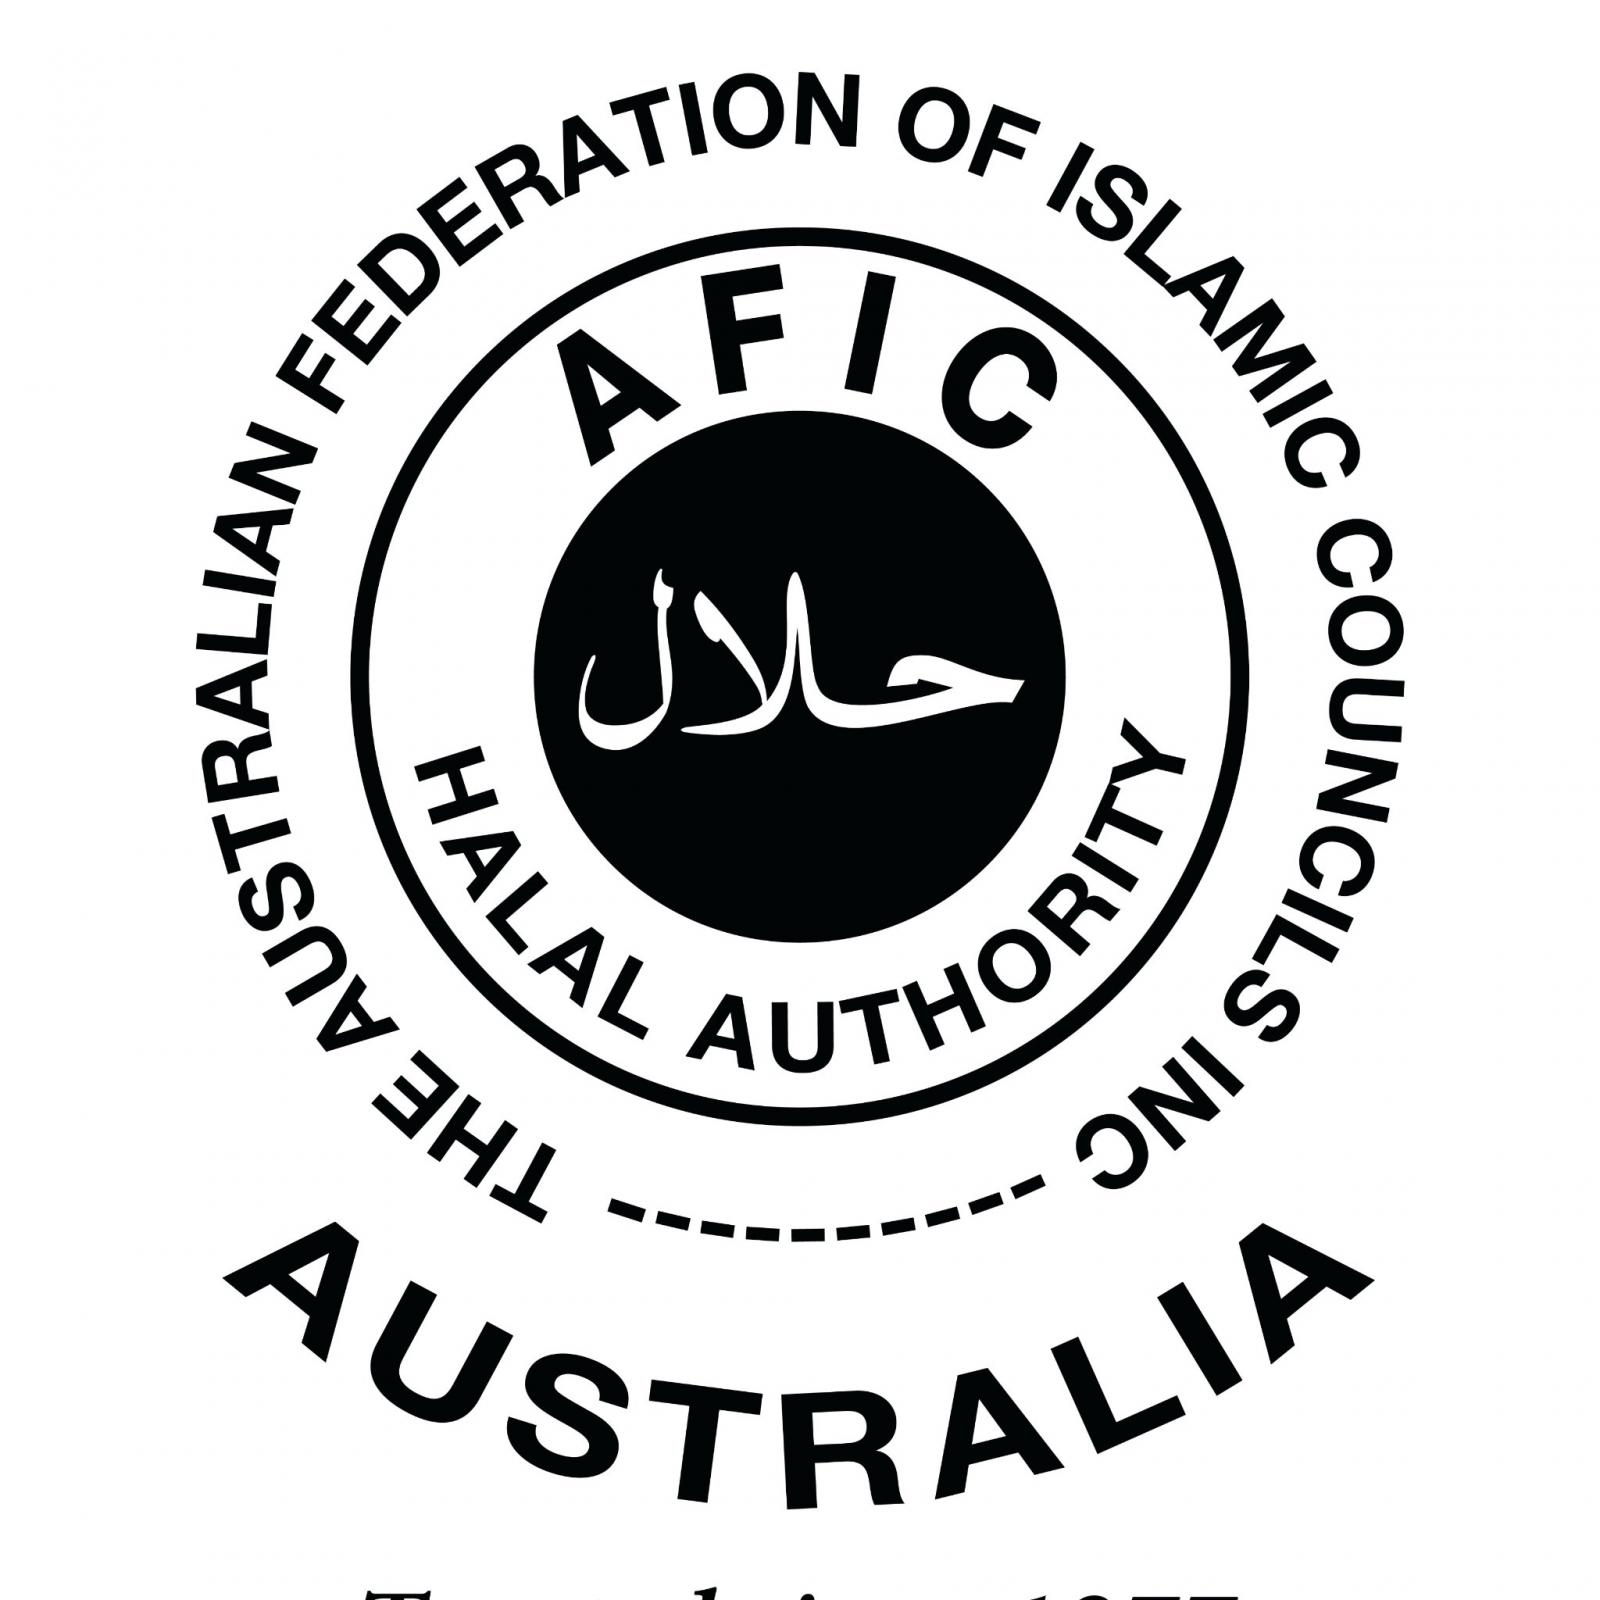 AFIC HALAL AUTHORITY